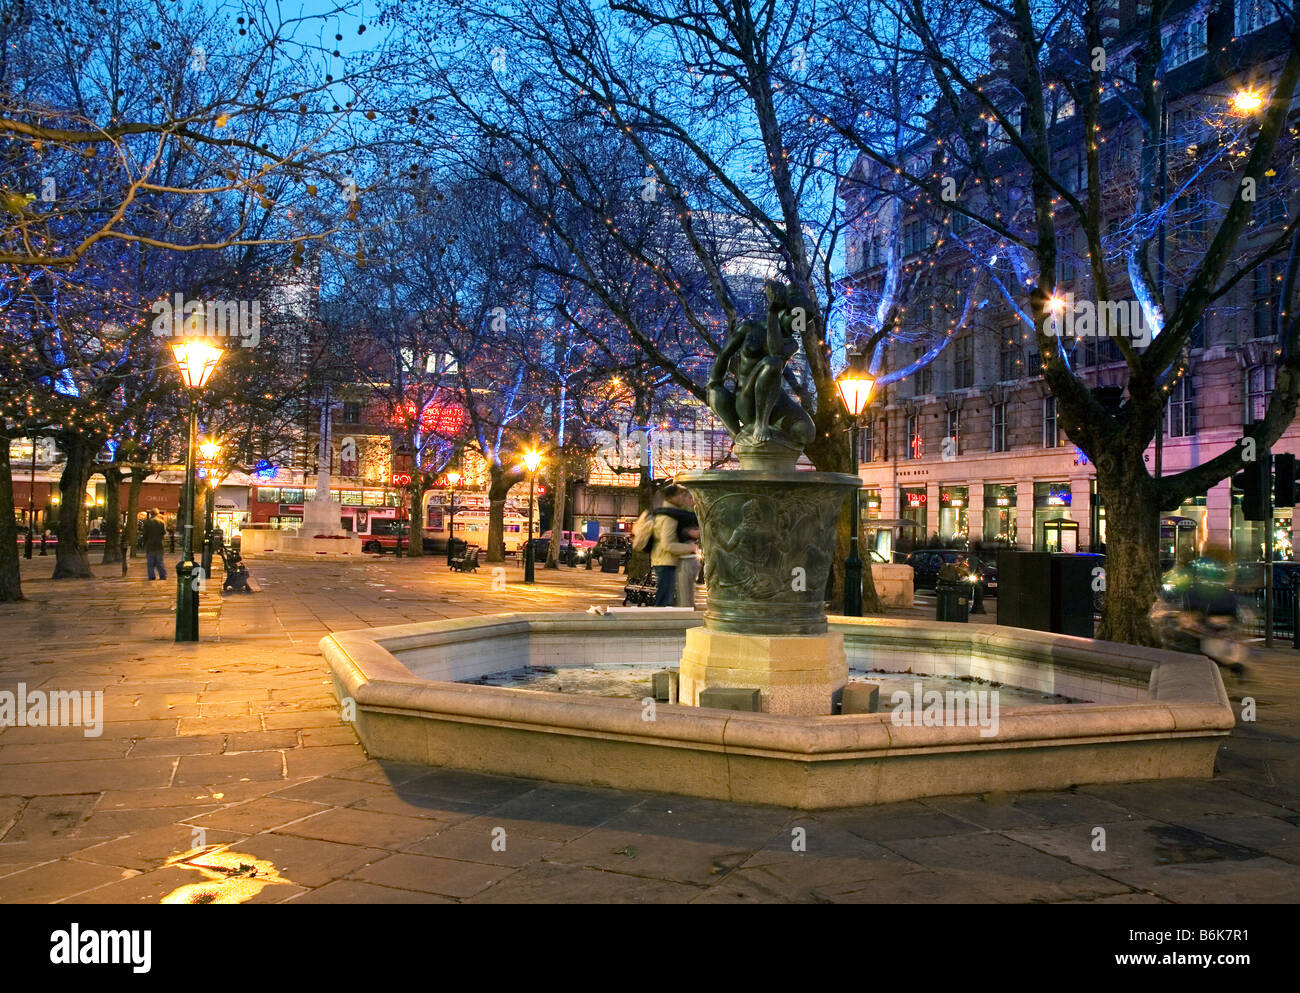 Weihnachtsbeleuchtung In Sloane Square Chelsea London UK Stockfoto